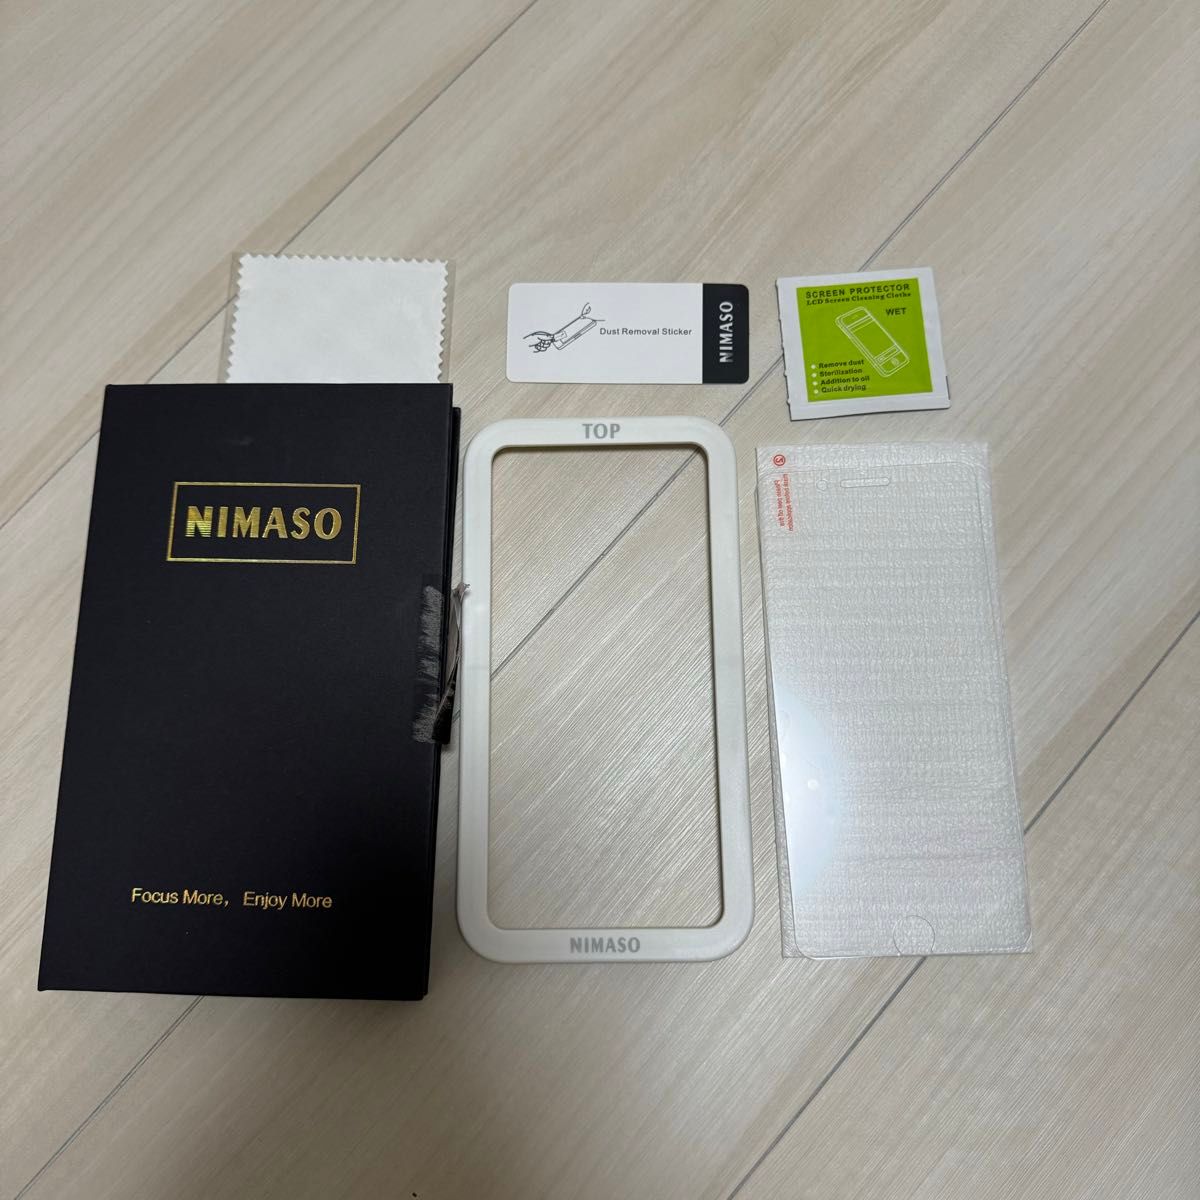 NIMASO iPhone8 Plus / iPhone7 Plus用 ガラスフィルム 強化ガラス 液晶保護フィルム iPhone